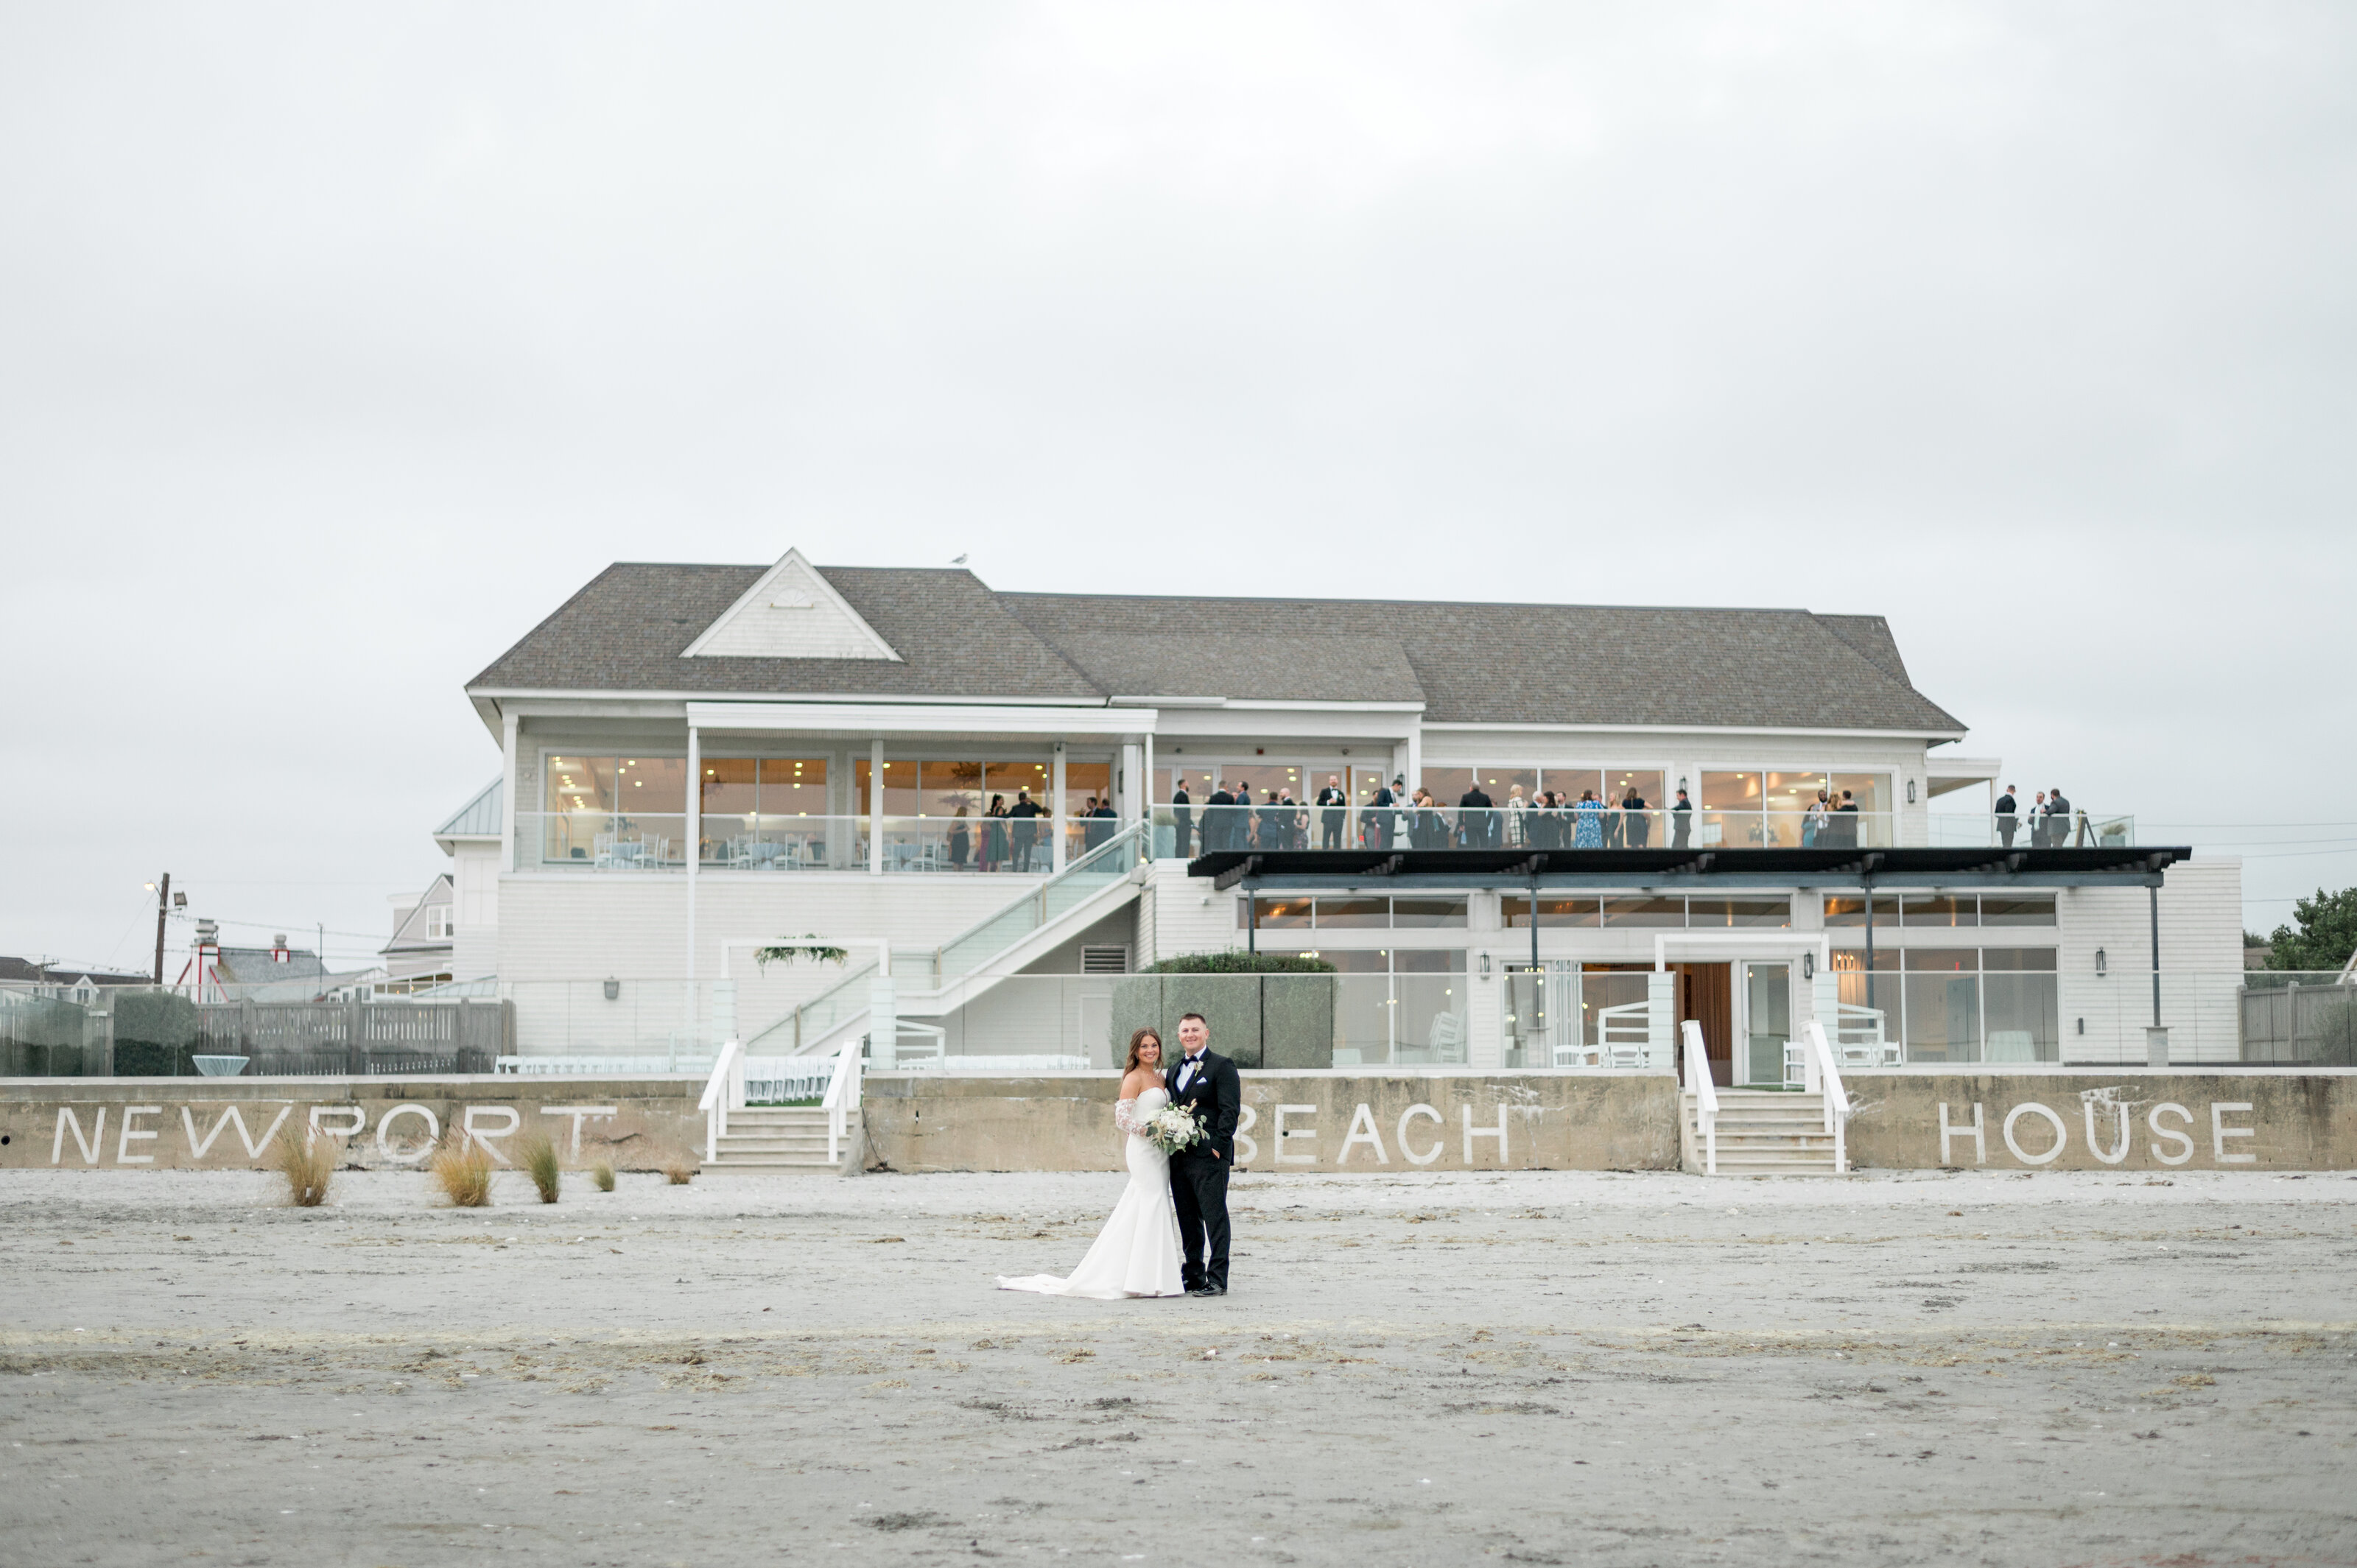 Newport Beach House Wedding Venue